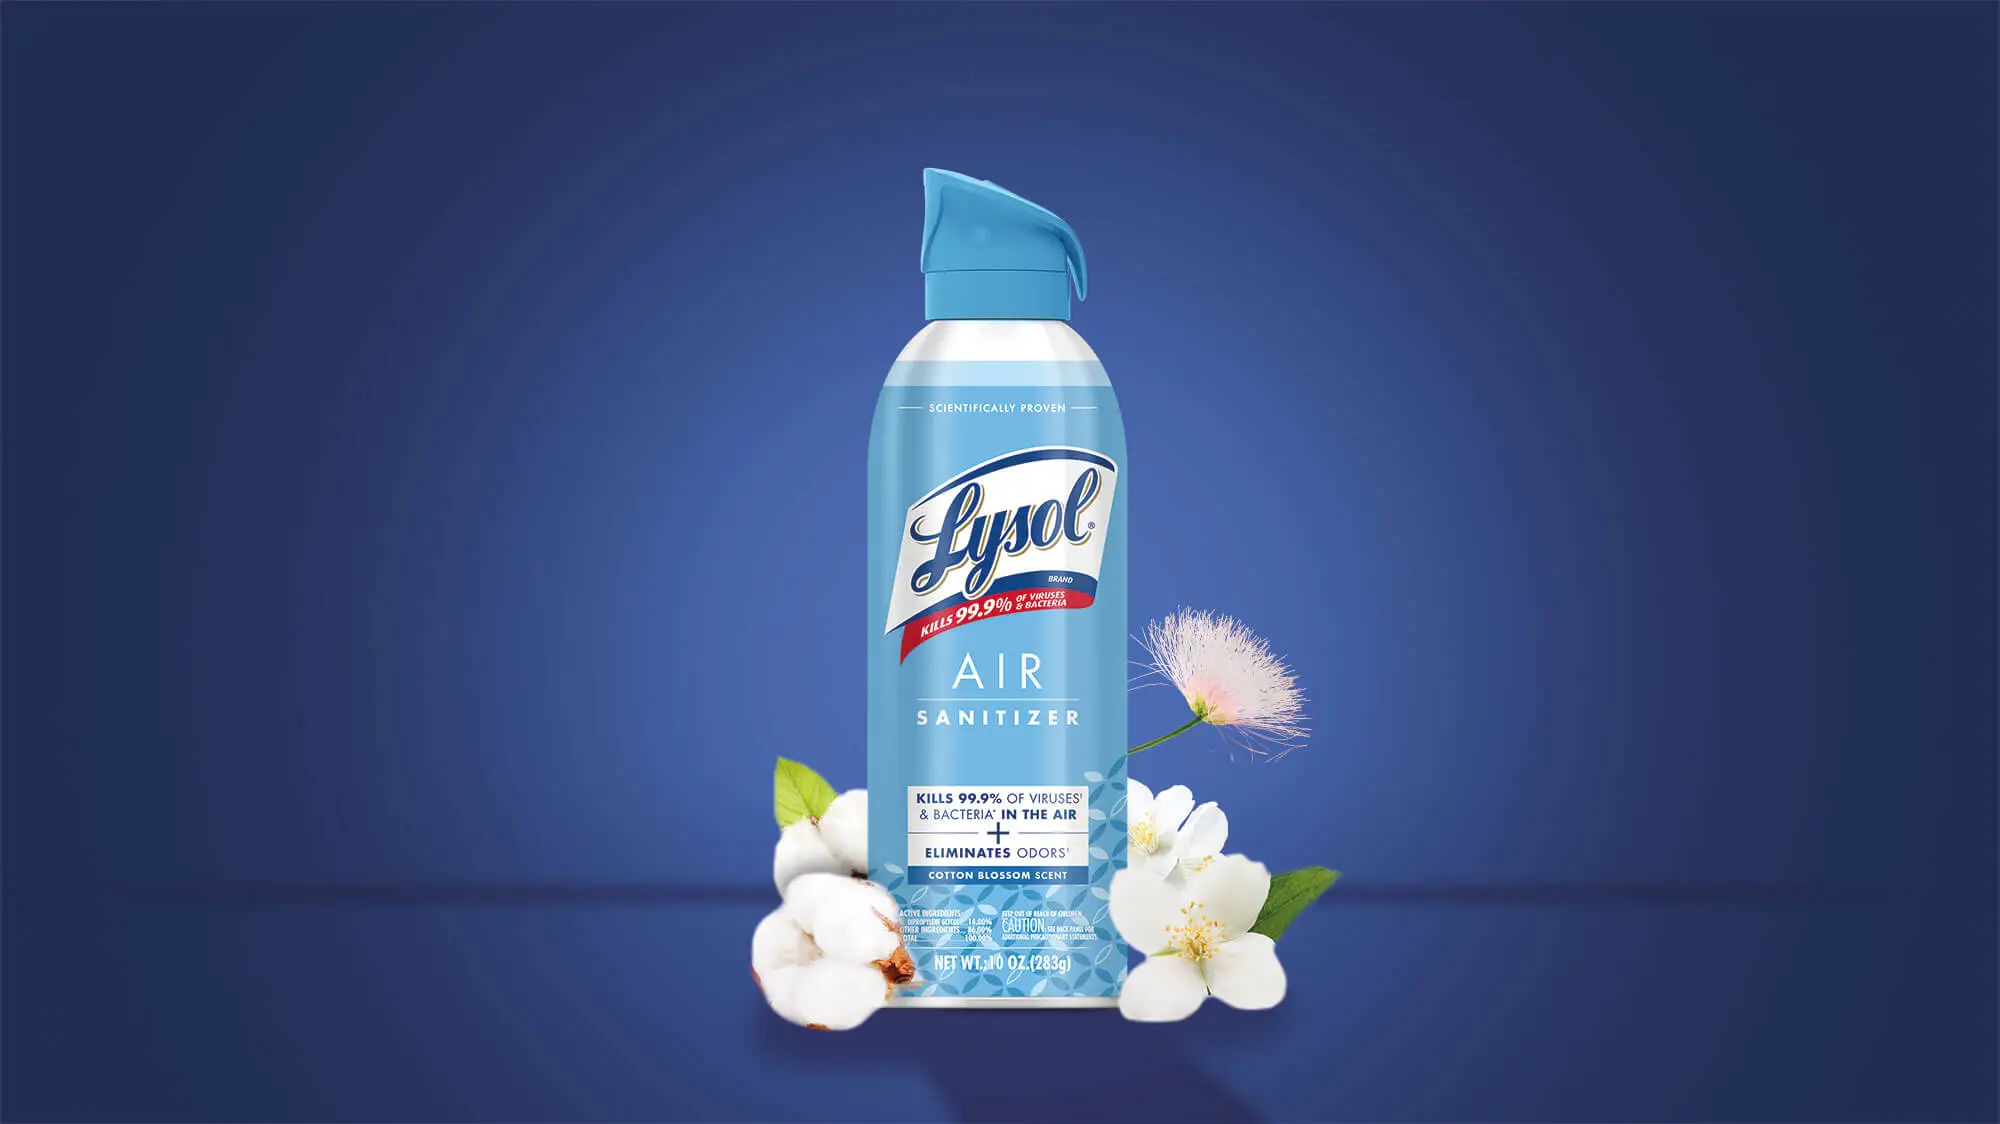 Lysol® Air Sanitizer Cottom Blossom